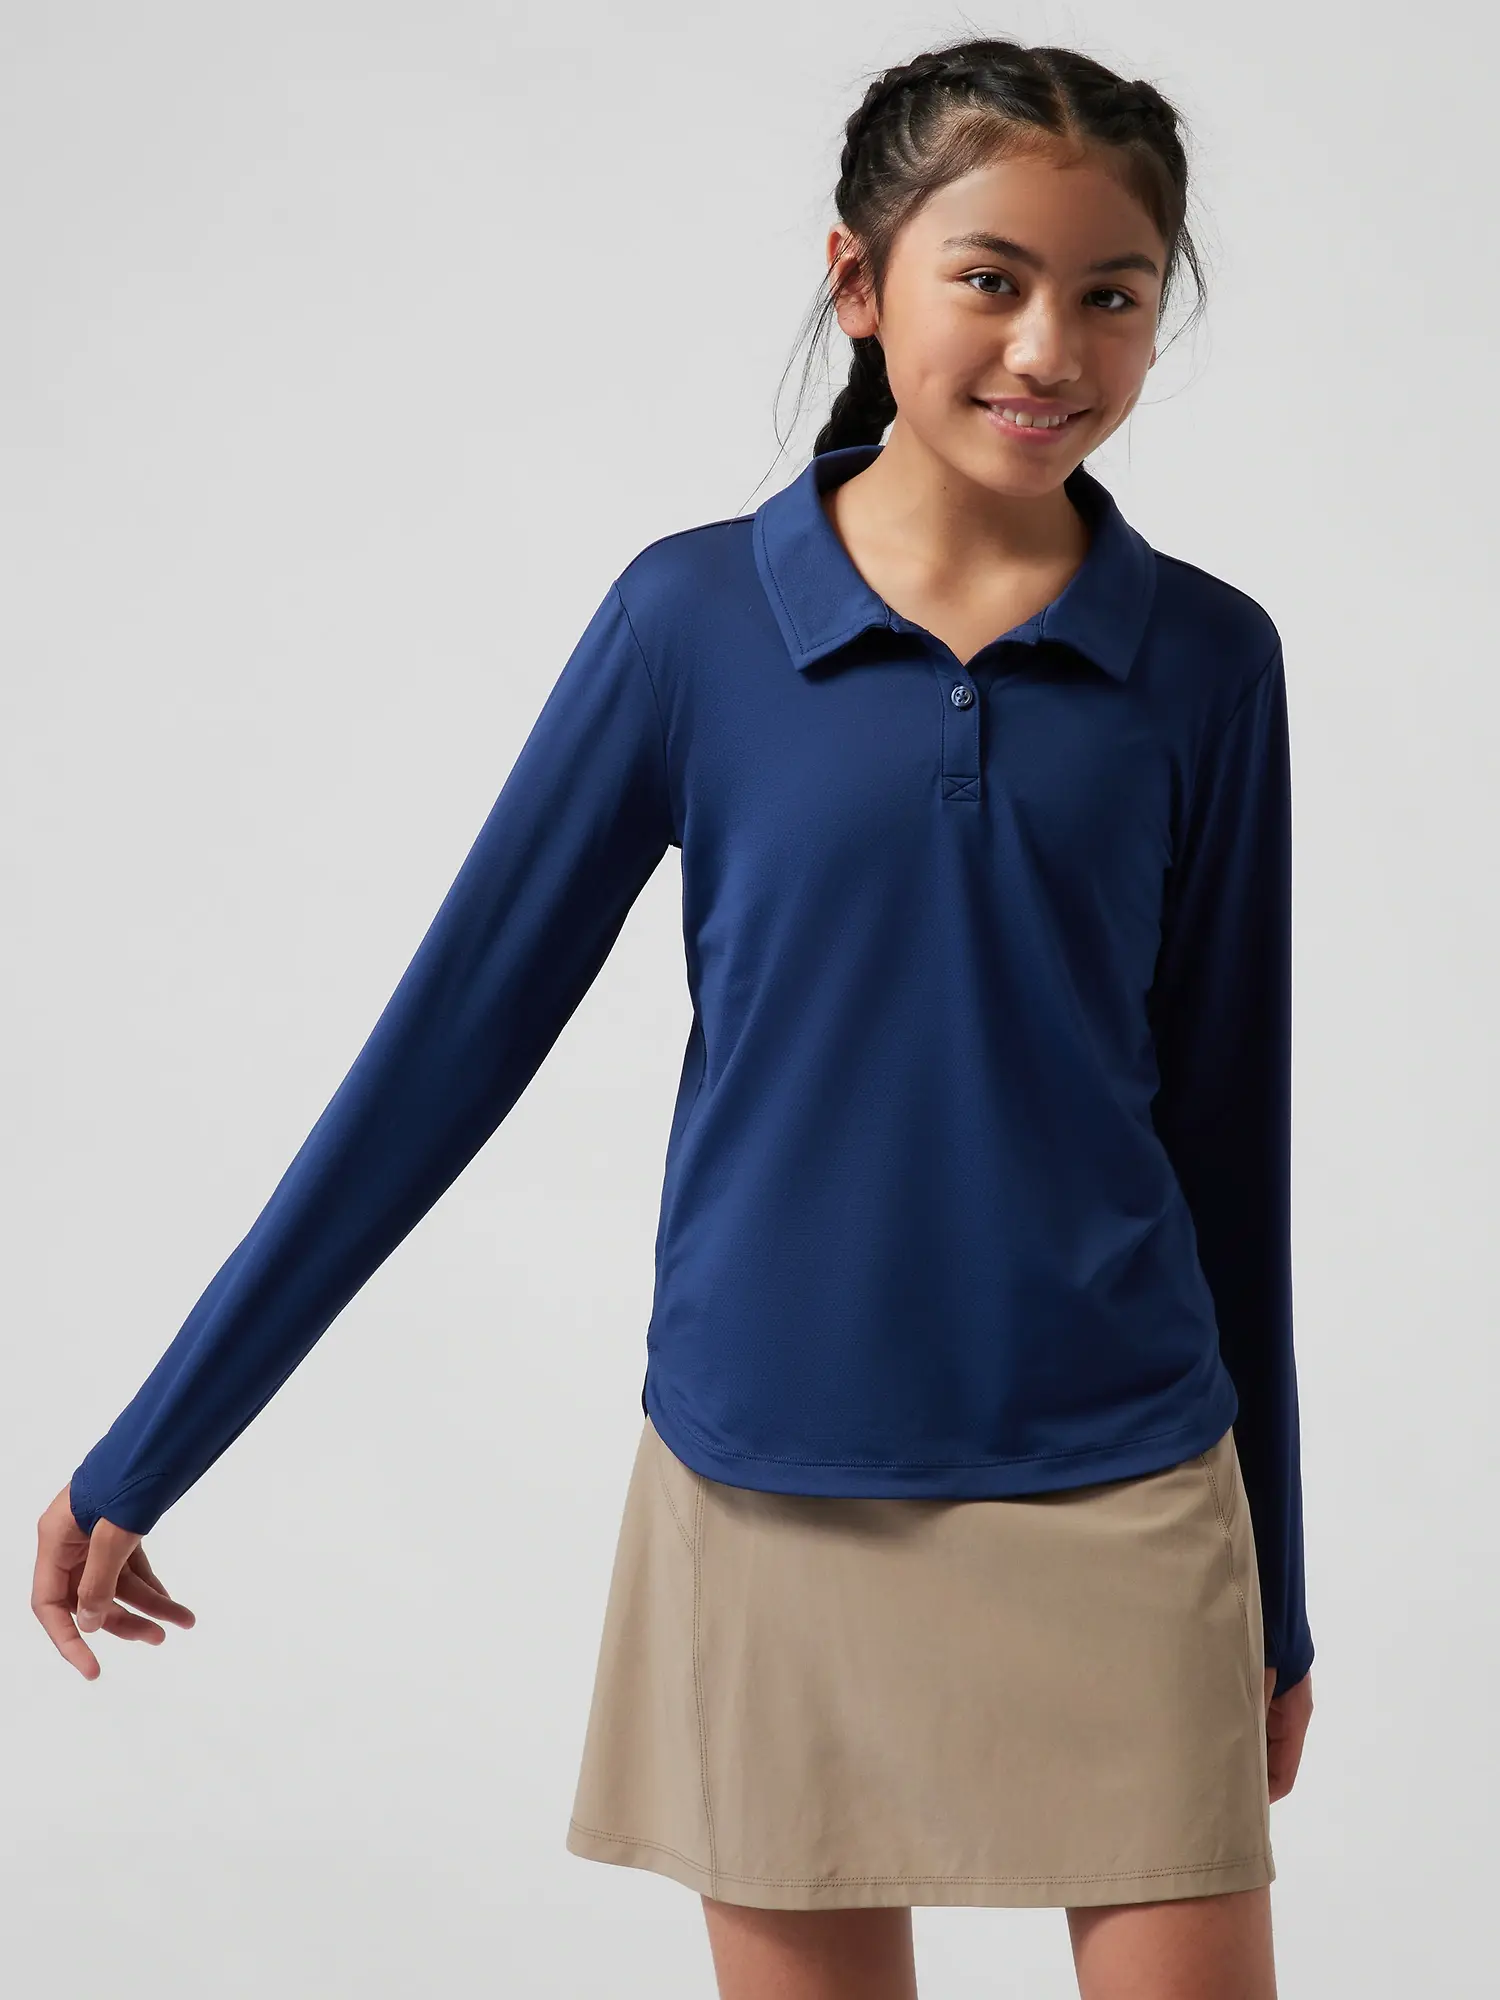 Athleta Girl School Day Longsleeve Polo blue. 1